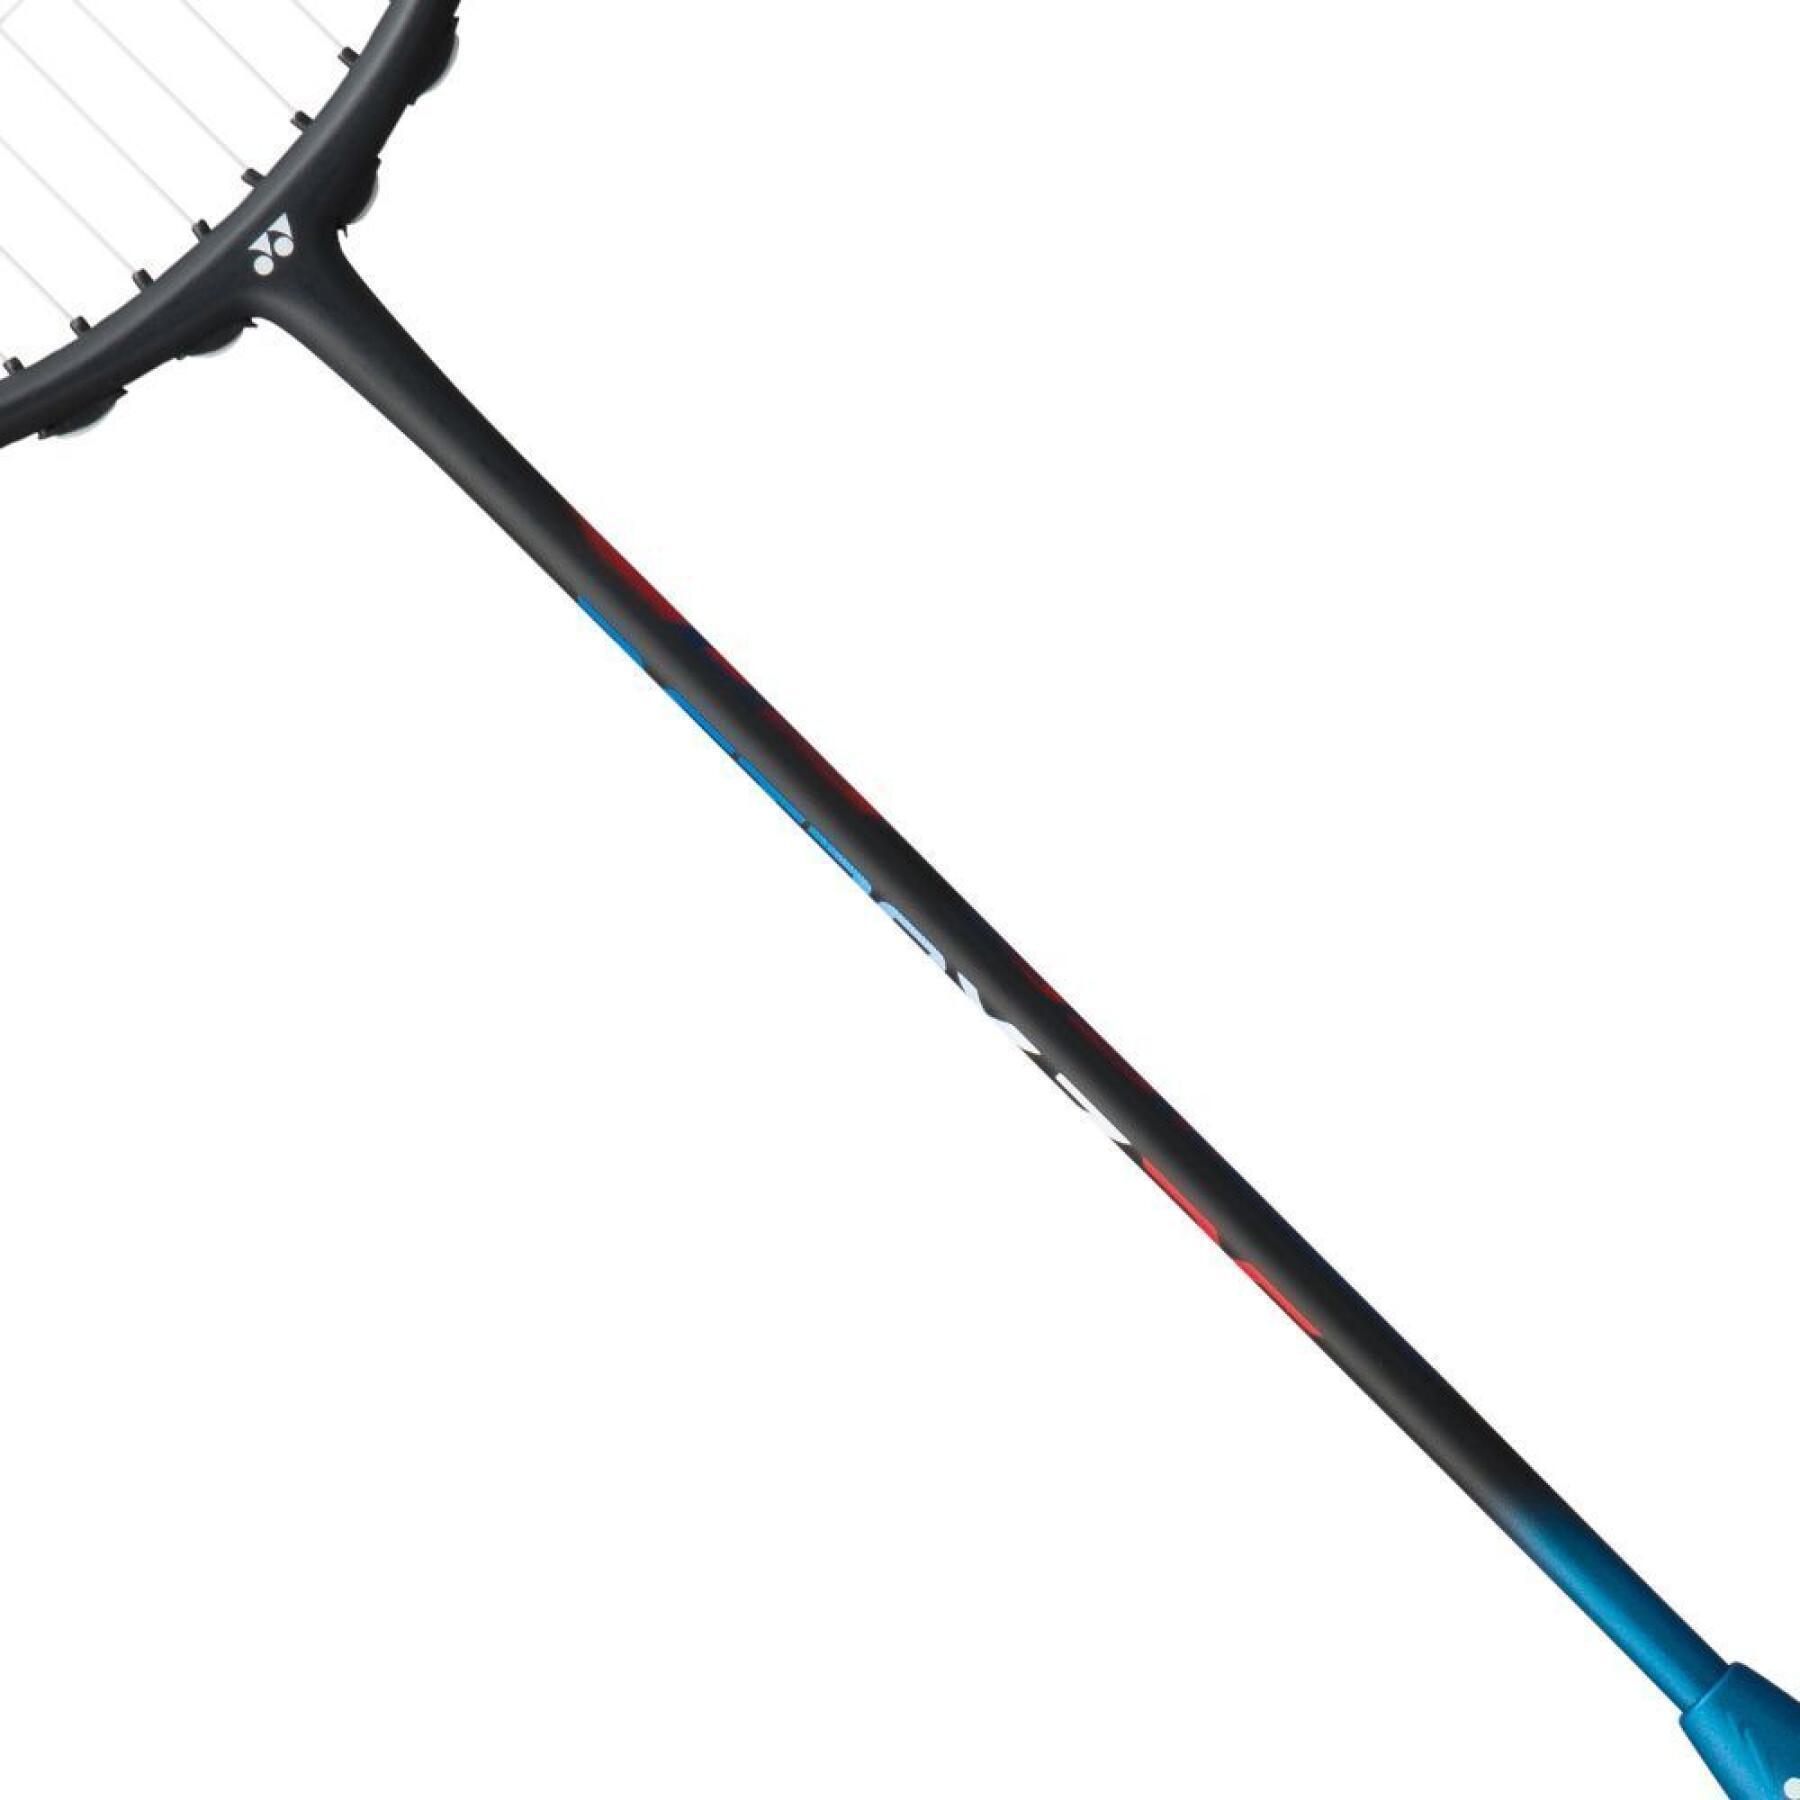 Racchetta da badminton Yonex astrox 7 dg